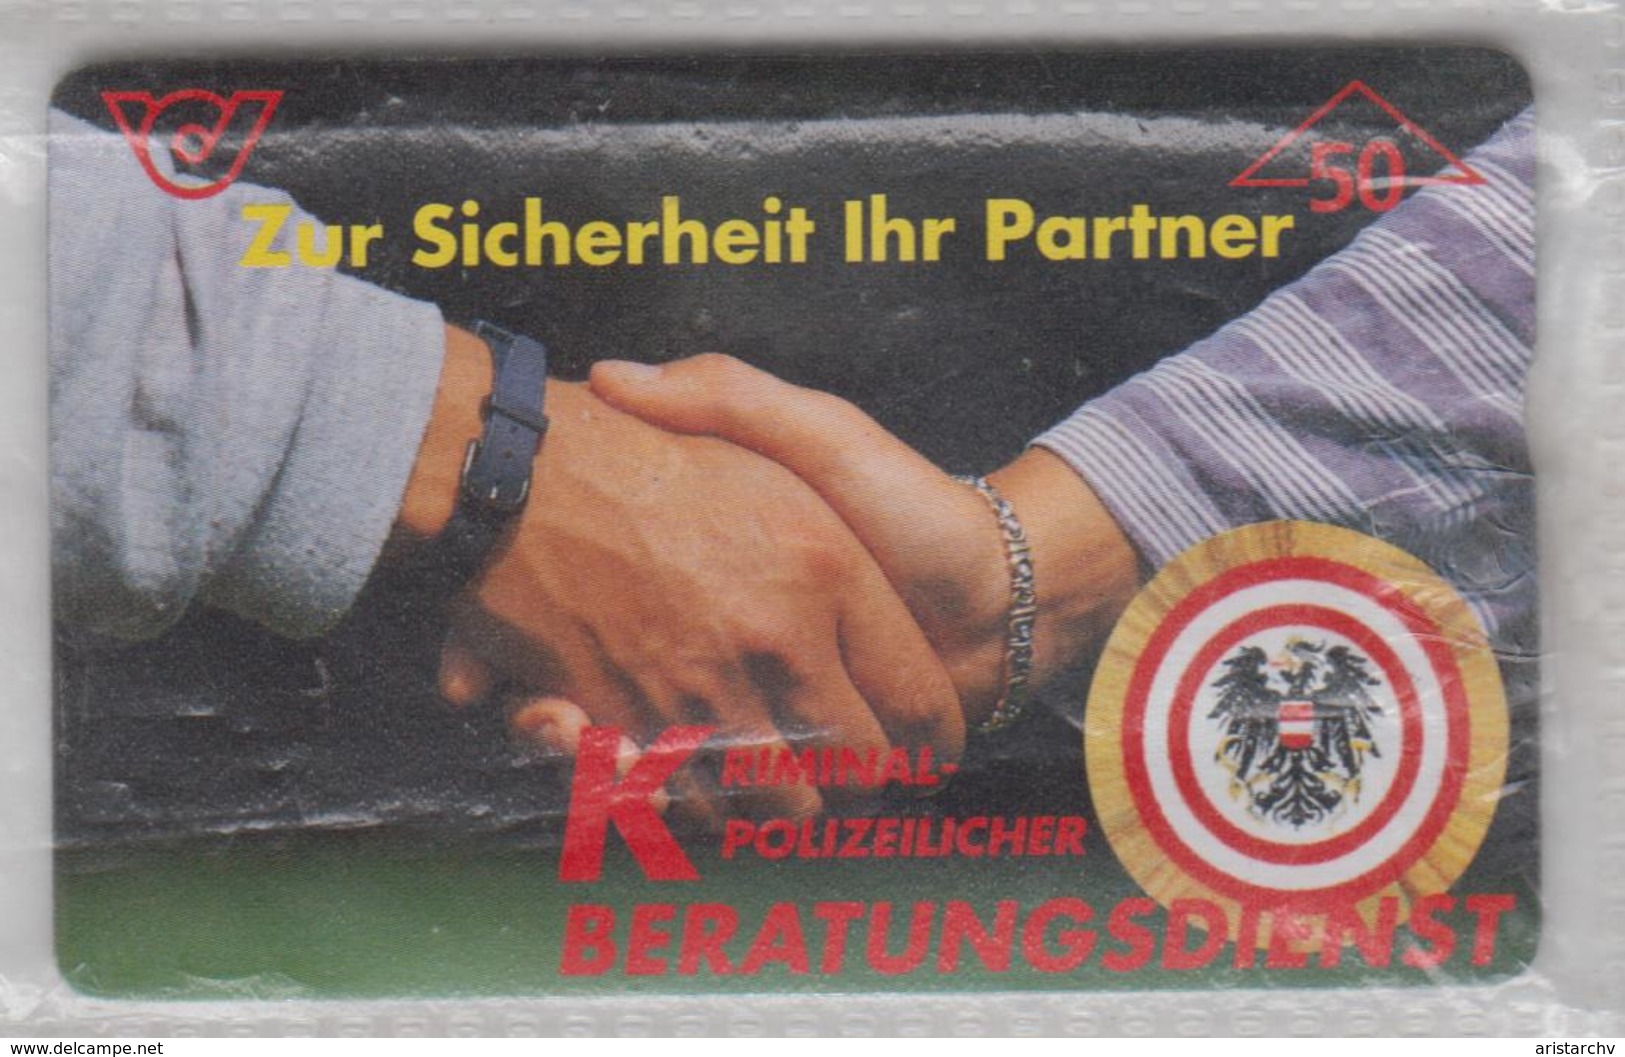 AUSTRIA 1996 KRIMINALPOLIZEILICHER BERATUNGSDIENST CRIMINAL POLICE USED PHONE CARD - Police